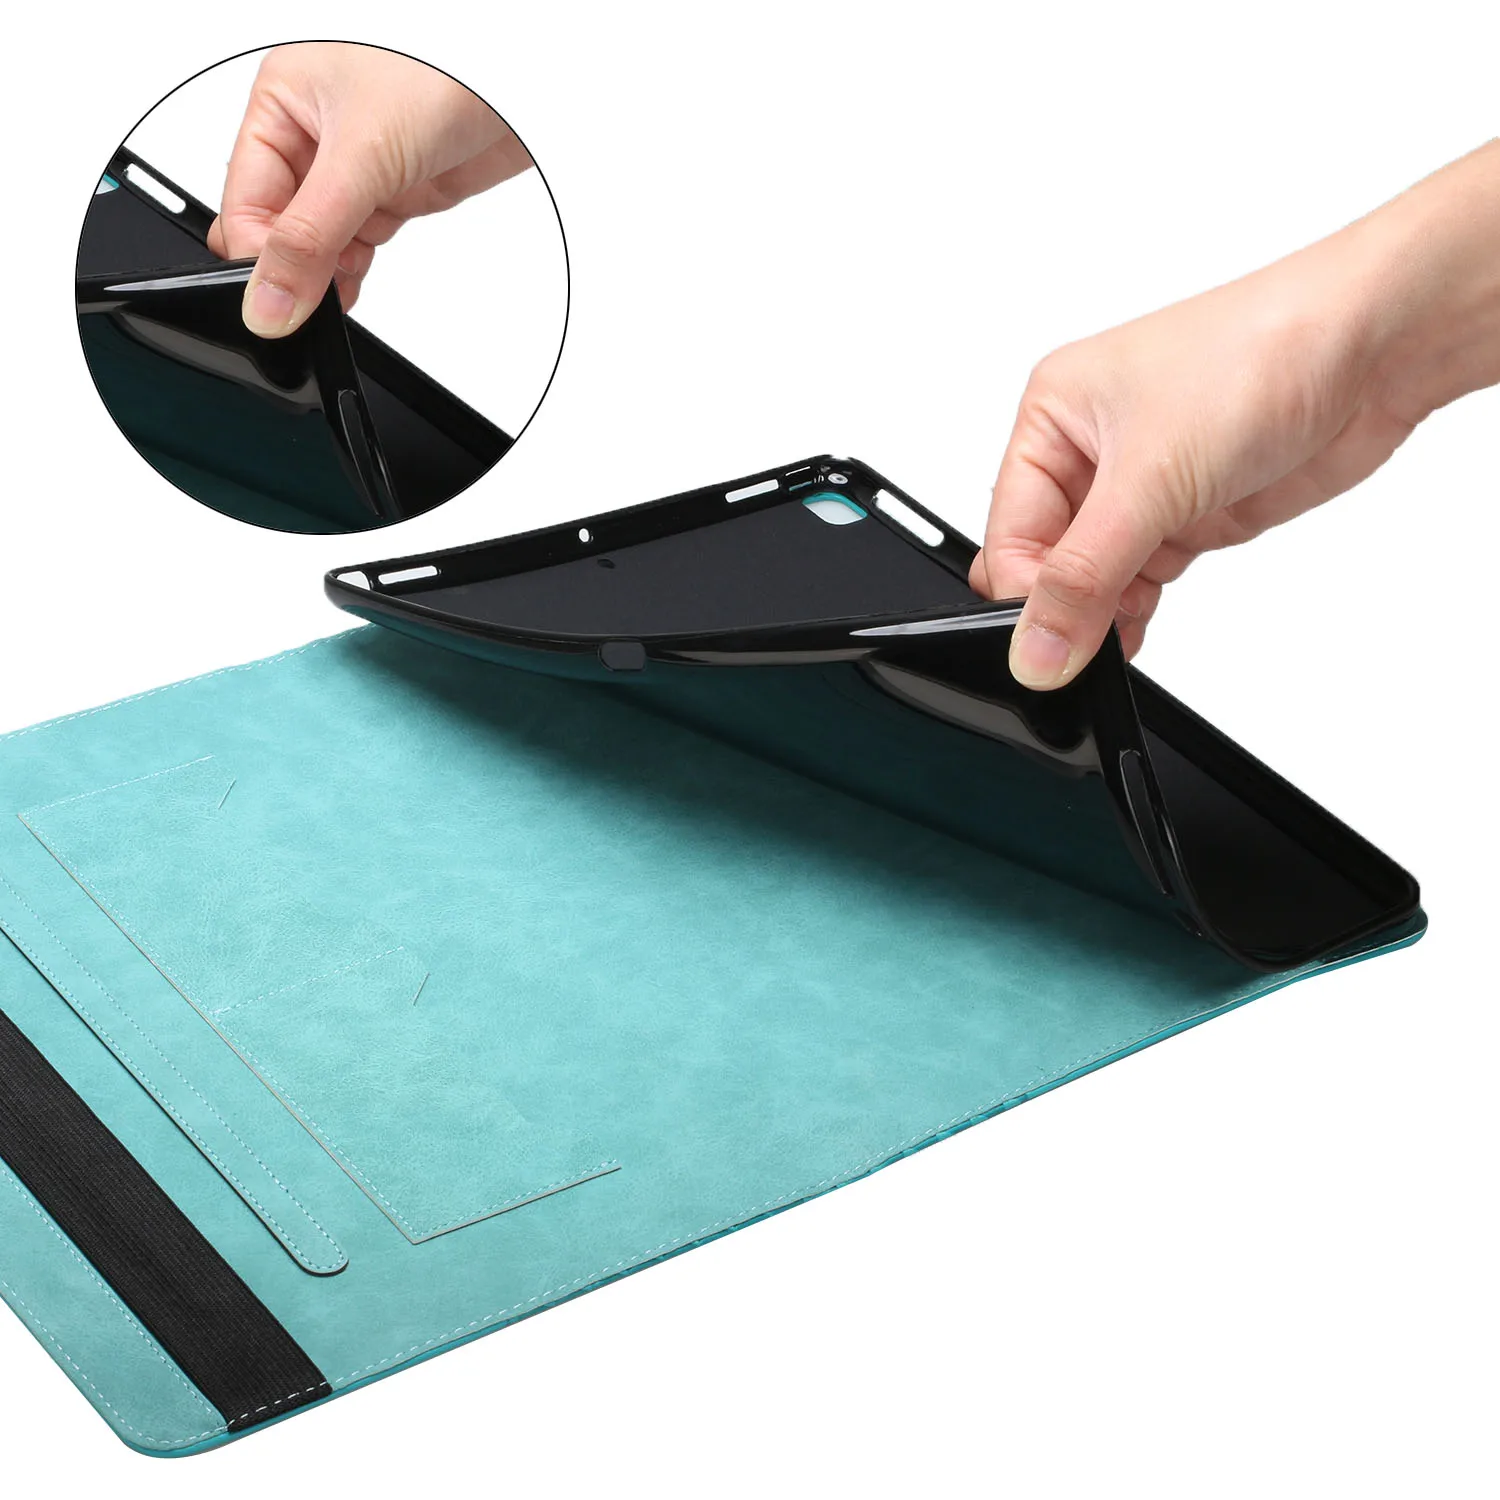 Кожаный чехол с бриллиантами на ощупь для Samsung Galaxy Tab A7 T500 10,4 2020, чехол для планшета Samsung tab a7 t500, чехол 4